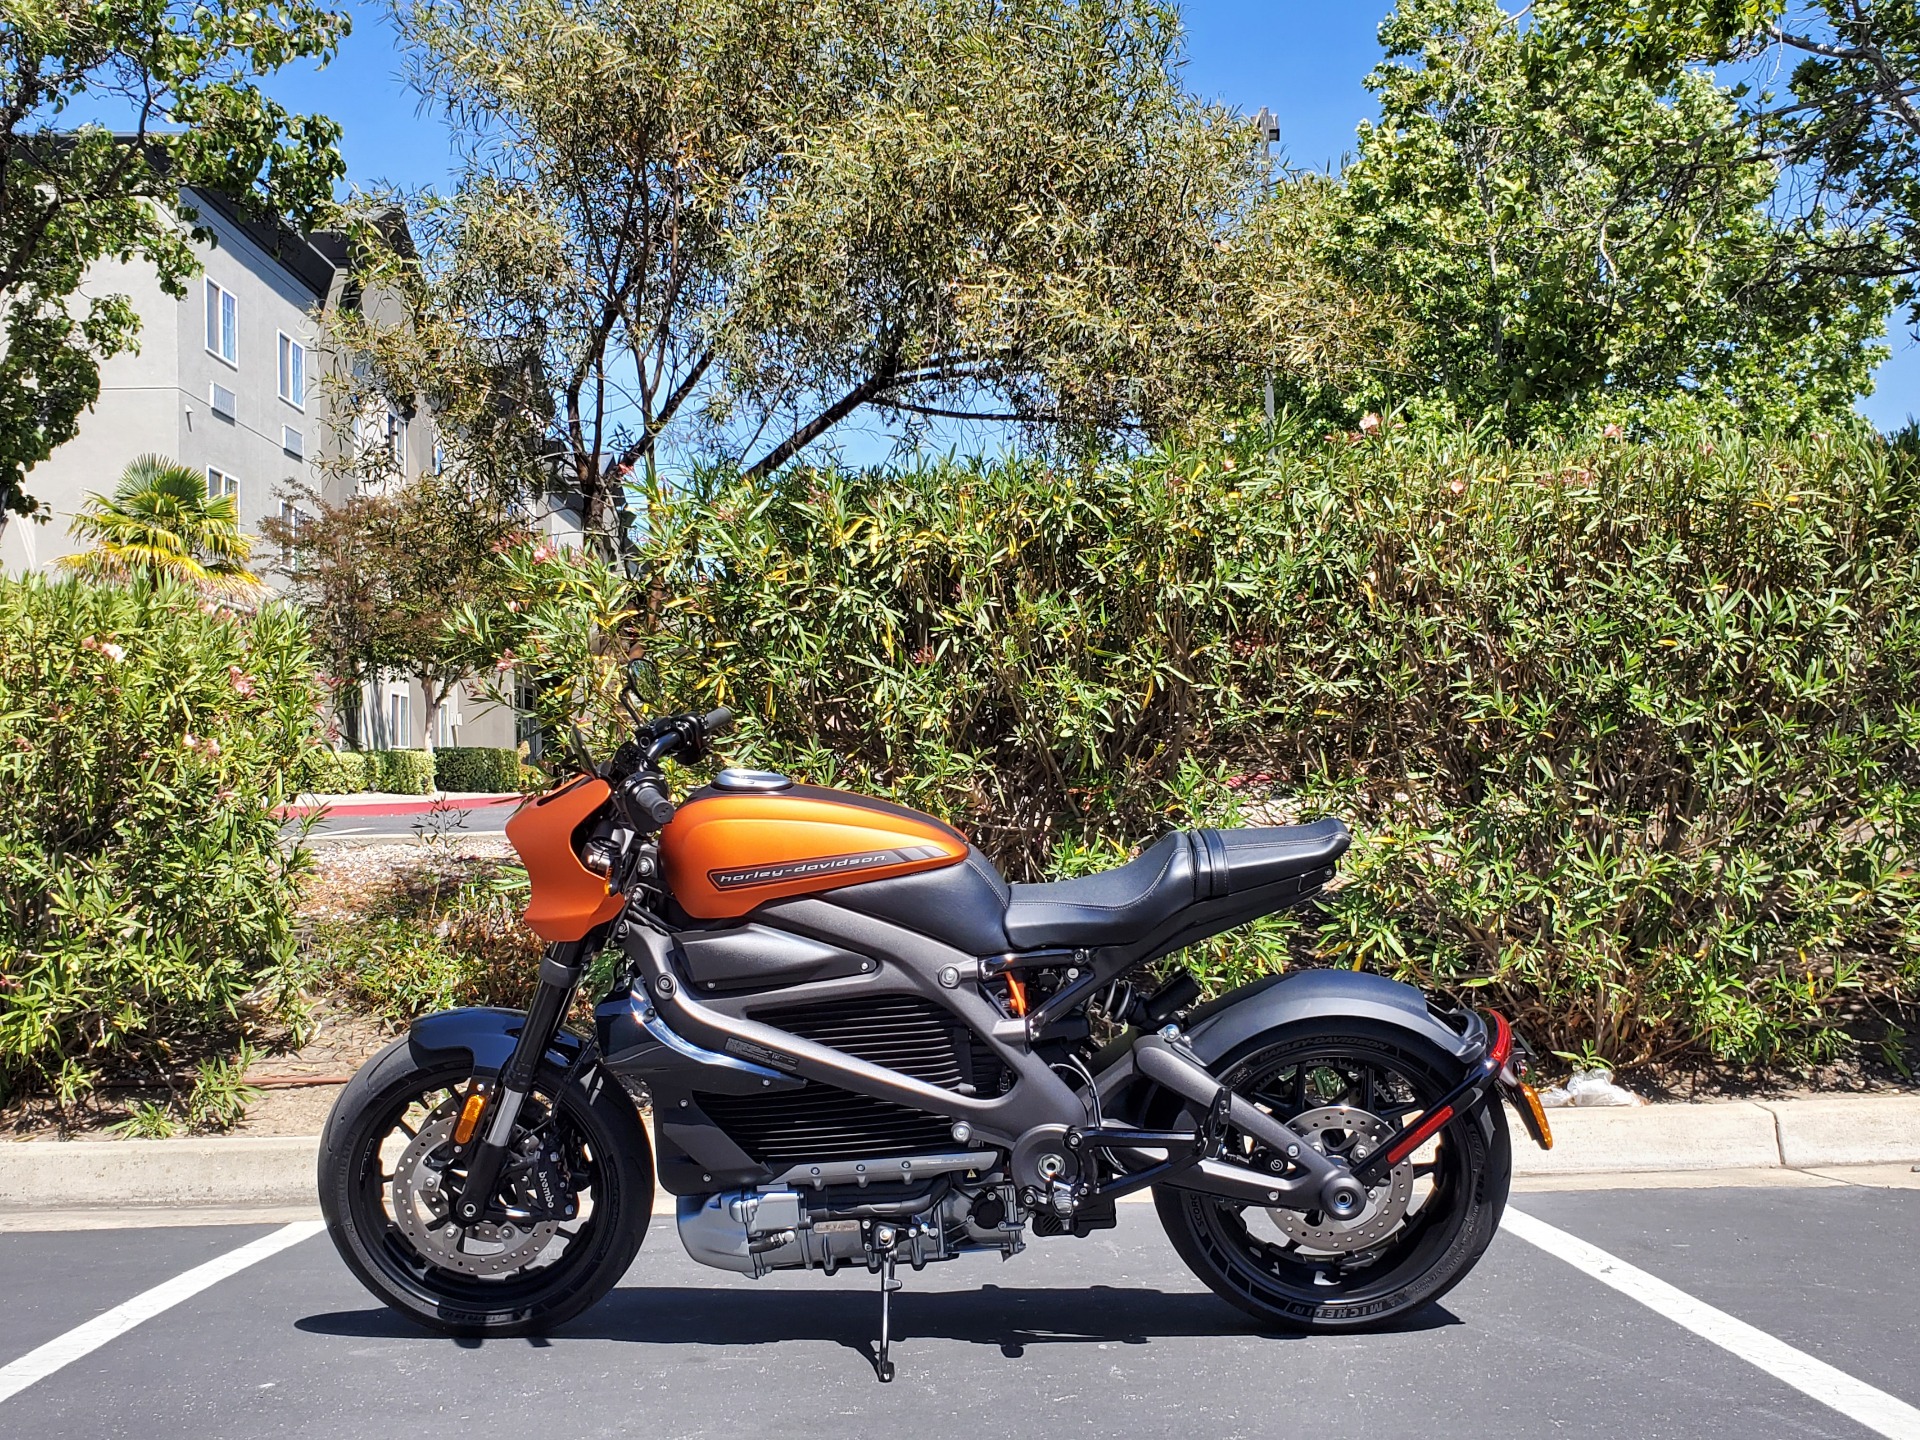 2020 Harley-Davidson Livewire™ in Livermore, California - Photo 1